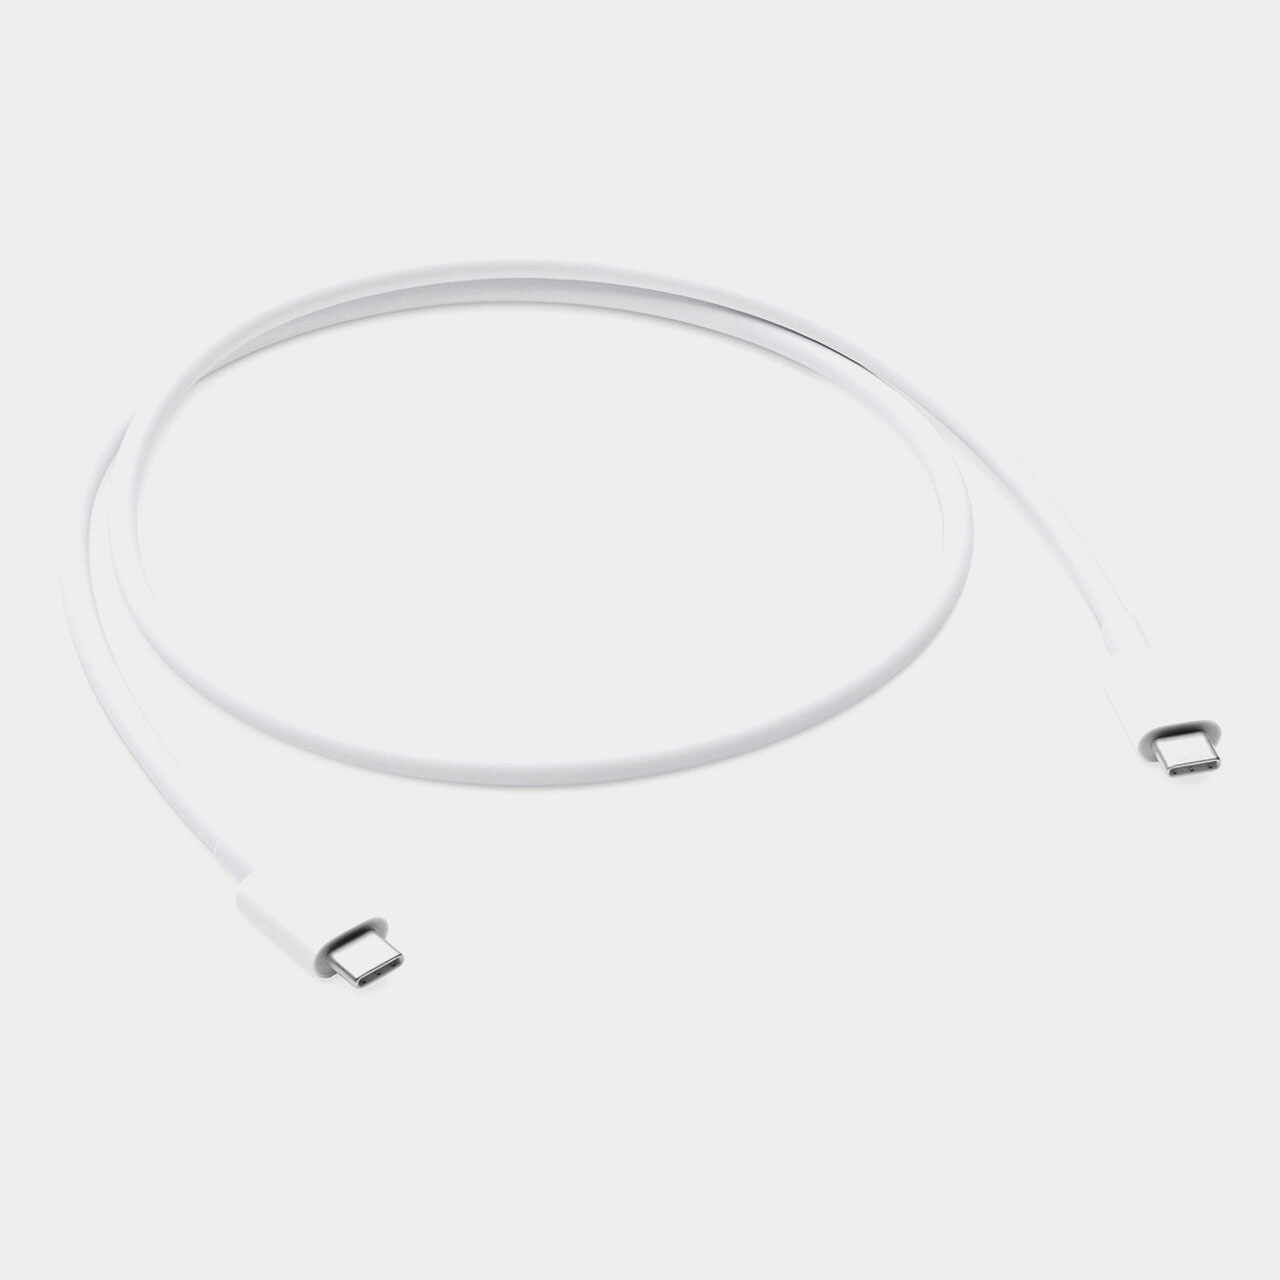 Apple Thunderbolt 3 (USB-C) Cable White (0.8m)